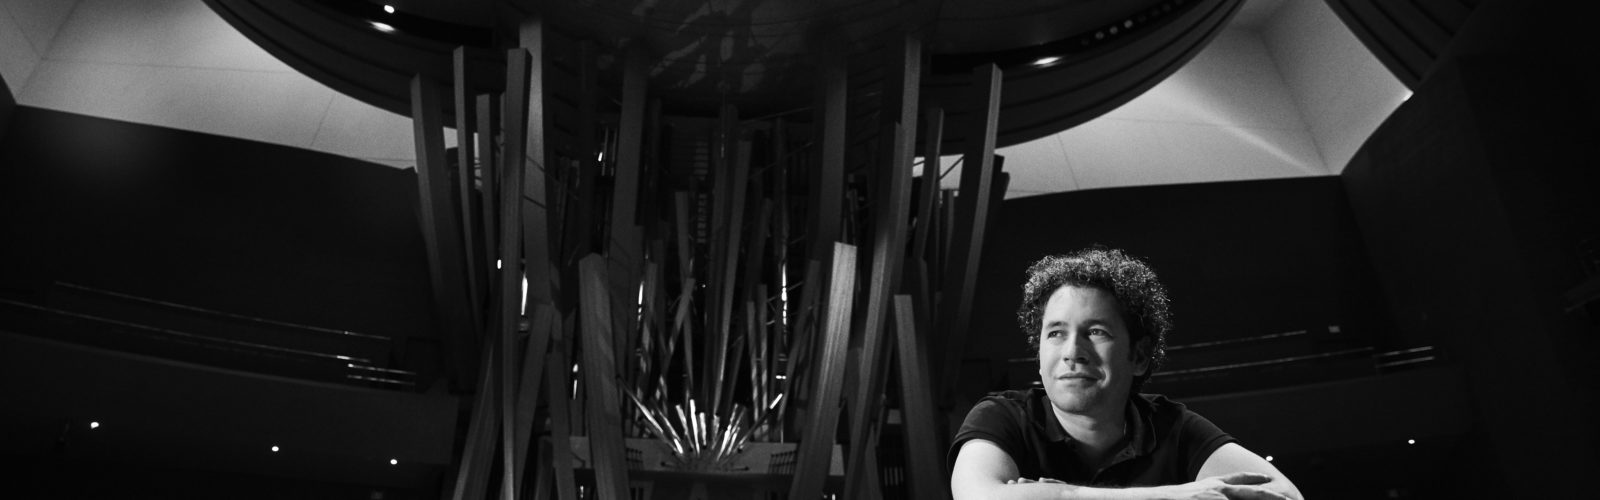 Gustavo Dudamel, Maria Valverde at Los Angeles Philharmonic